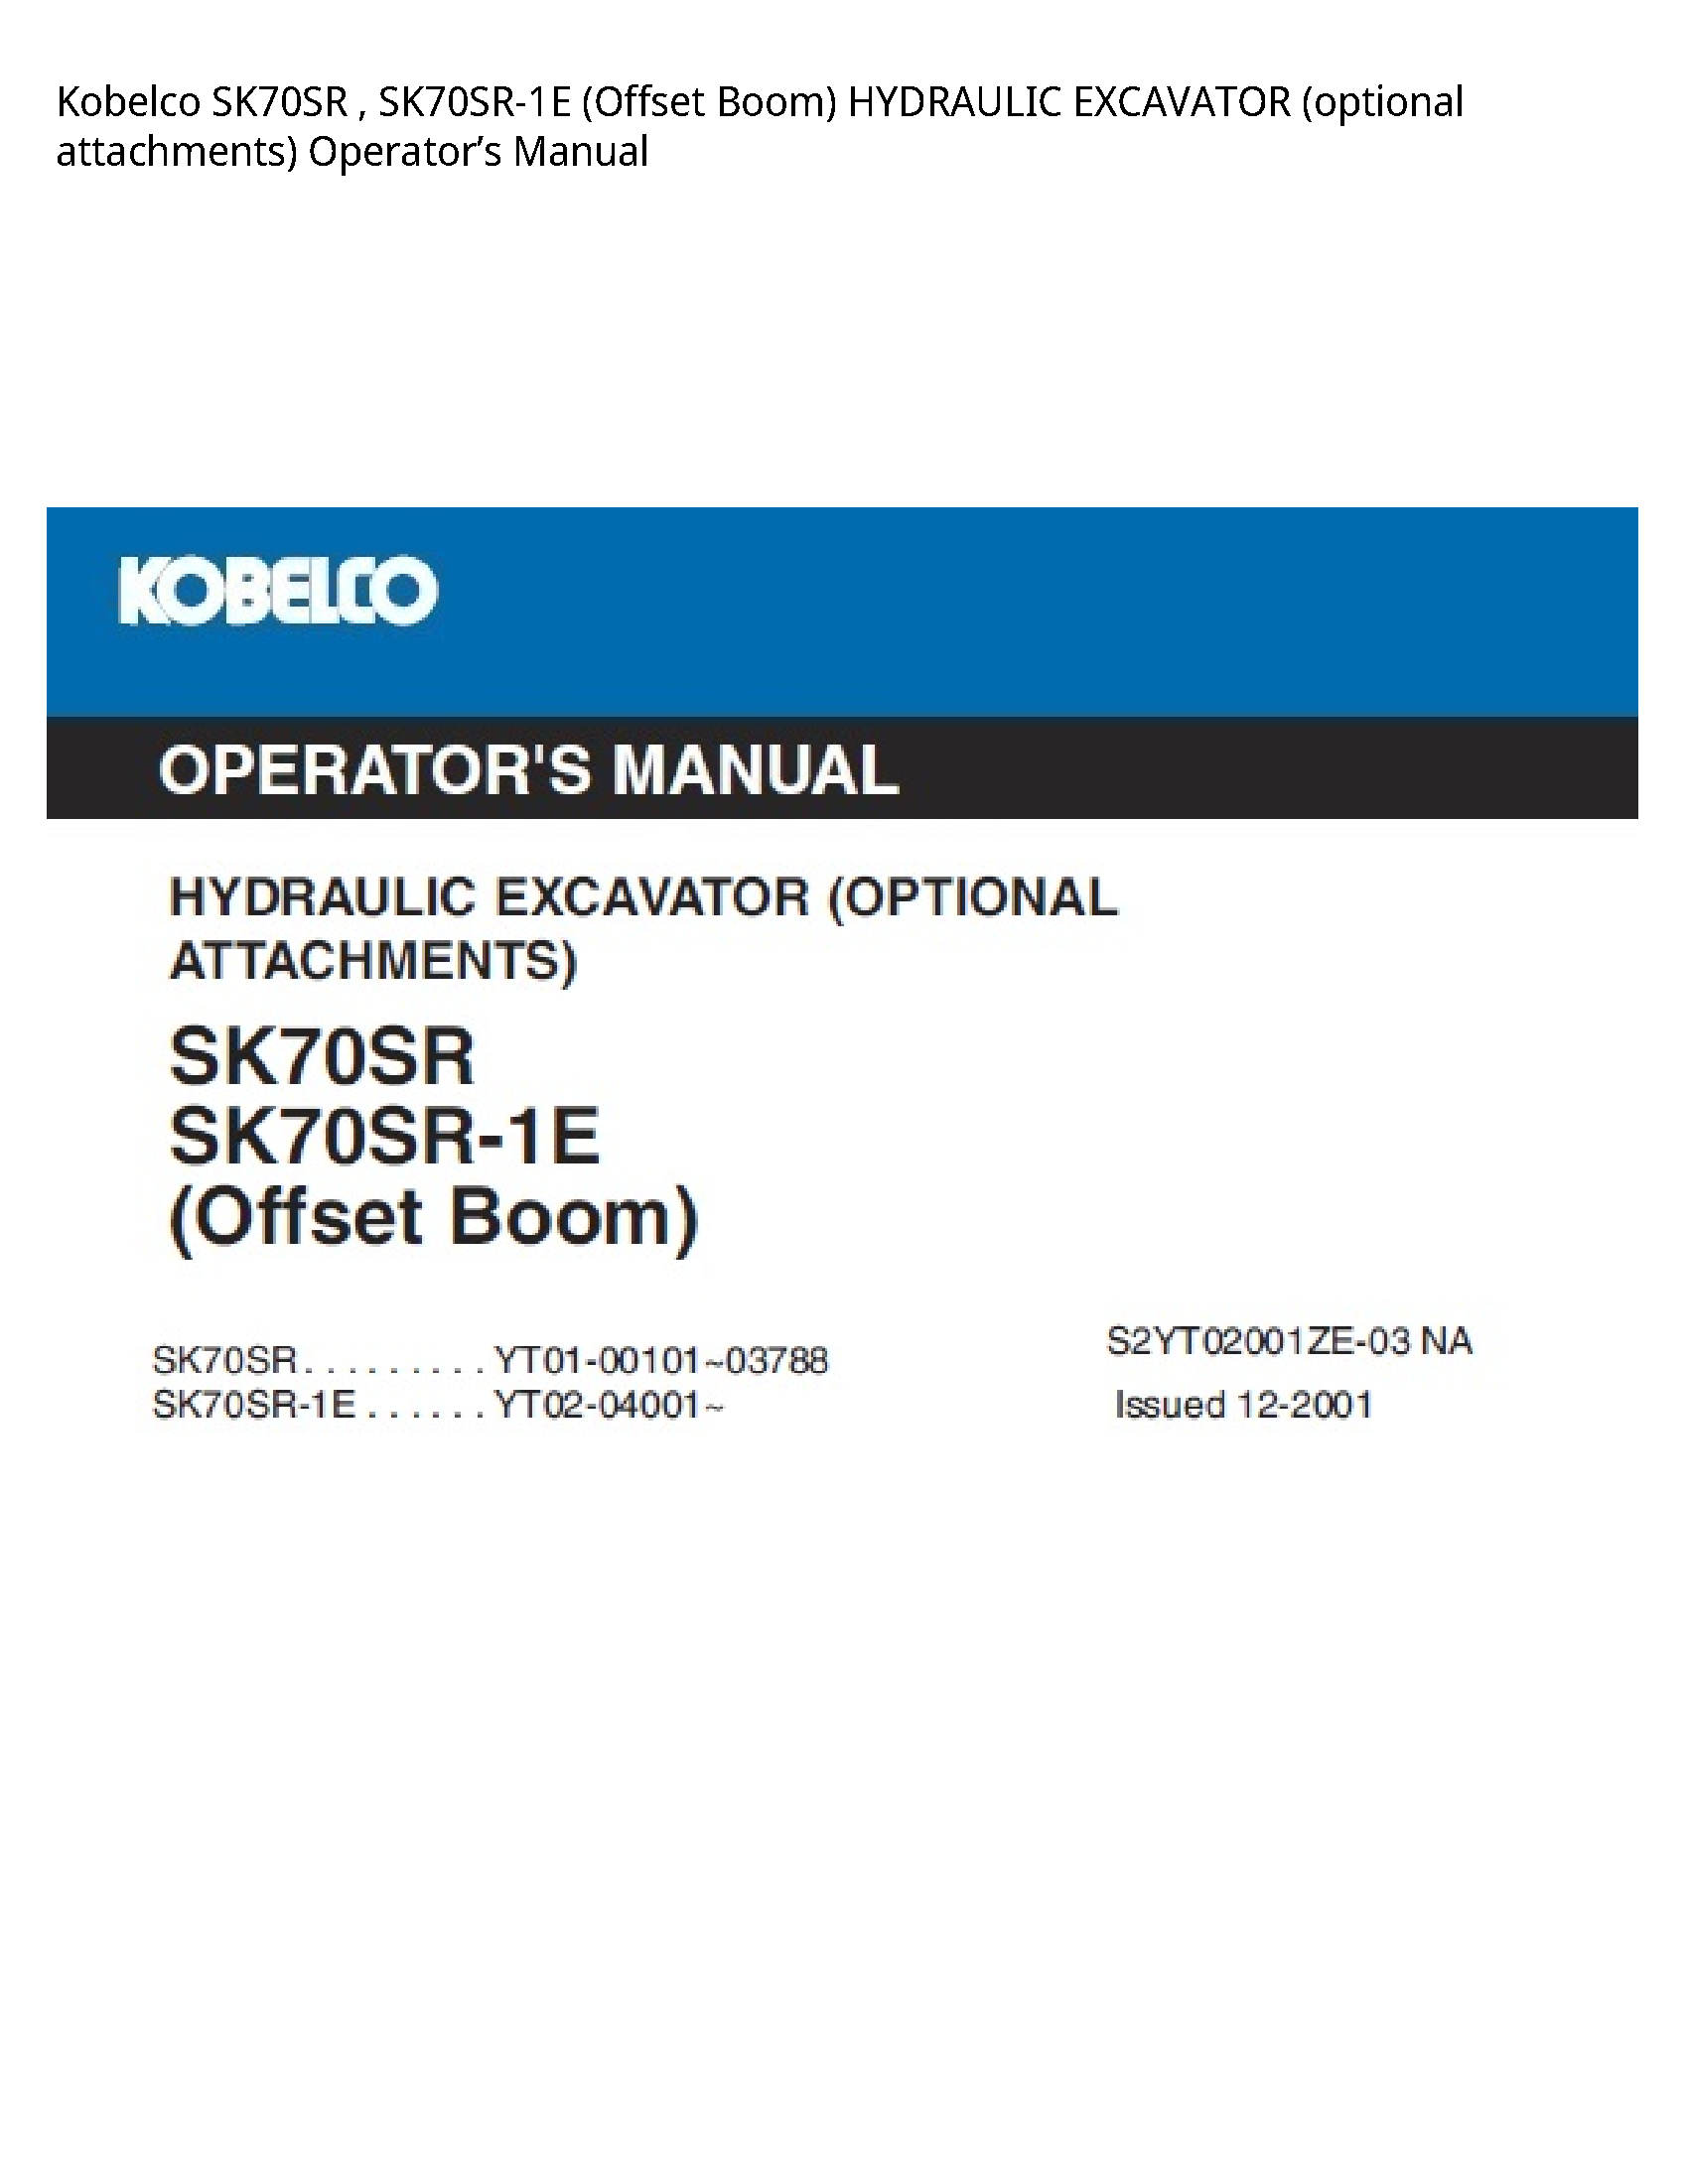 Kobelco SK70SR (Offset Boom) HYDRAULIC EXCAVATOR (optional attachments) Operator’s manual